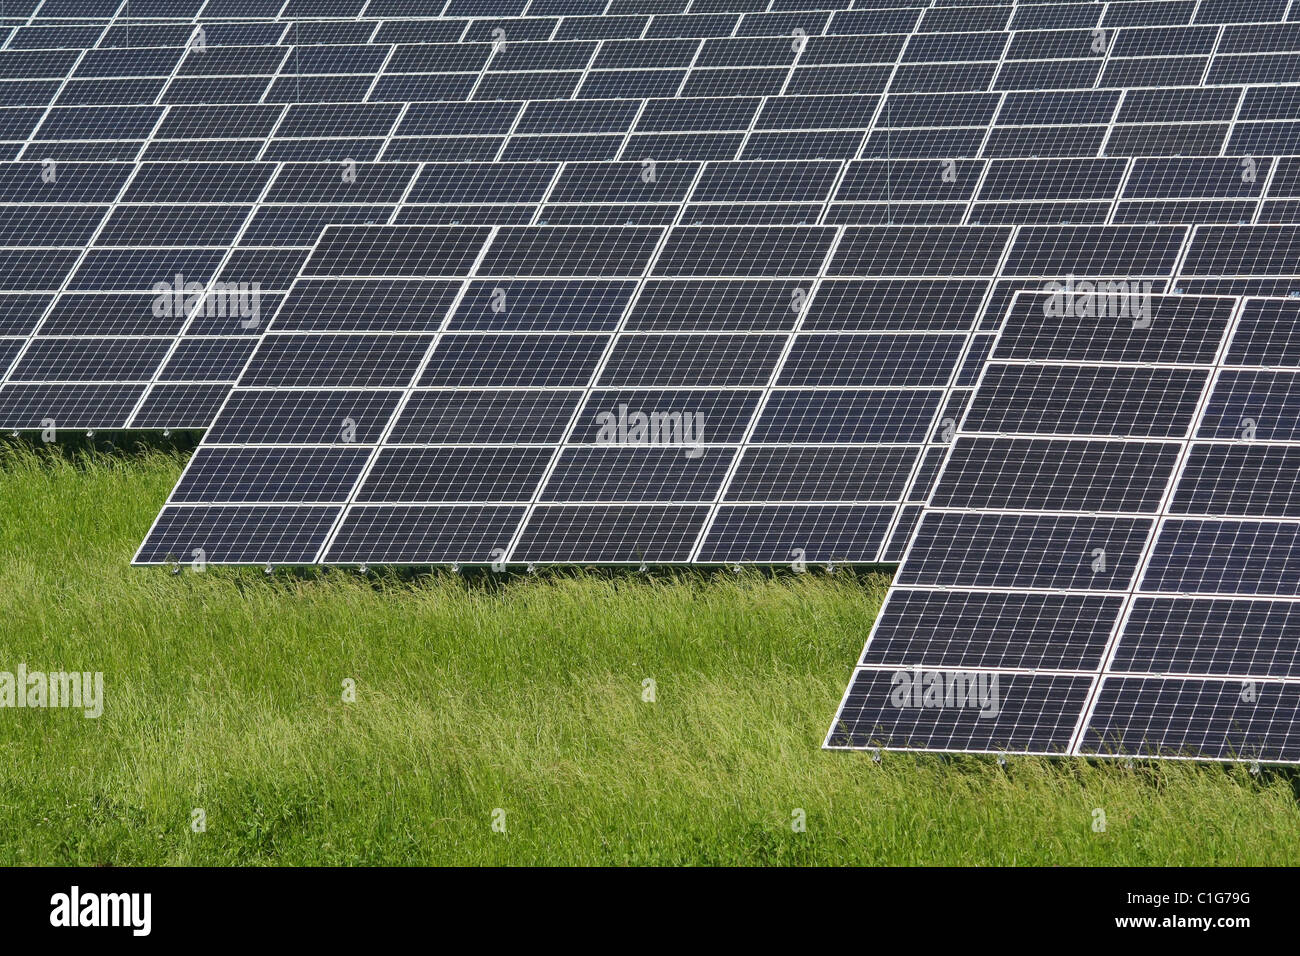 solar power plant Stock Photo